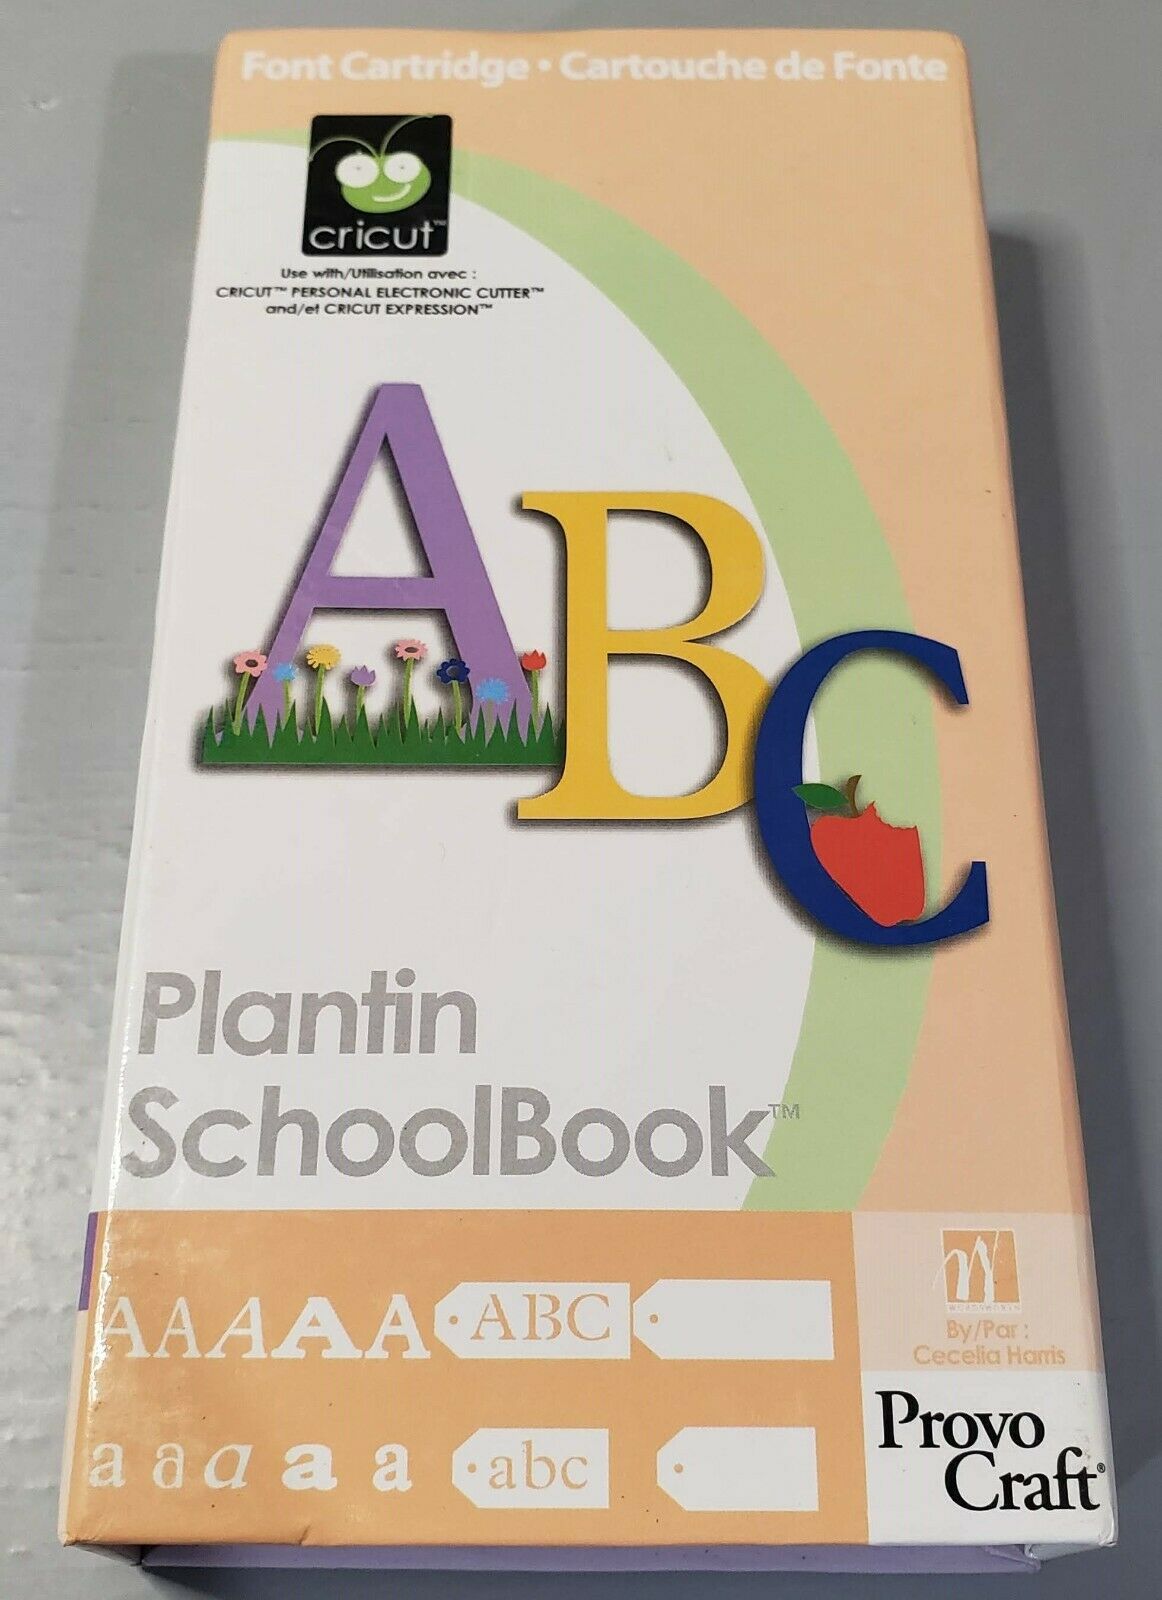 Cricut Plantin Schoolbook Cartridge Provo Craft 29-0390 - Text/shapes